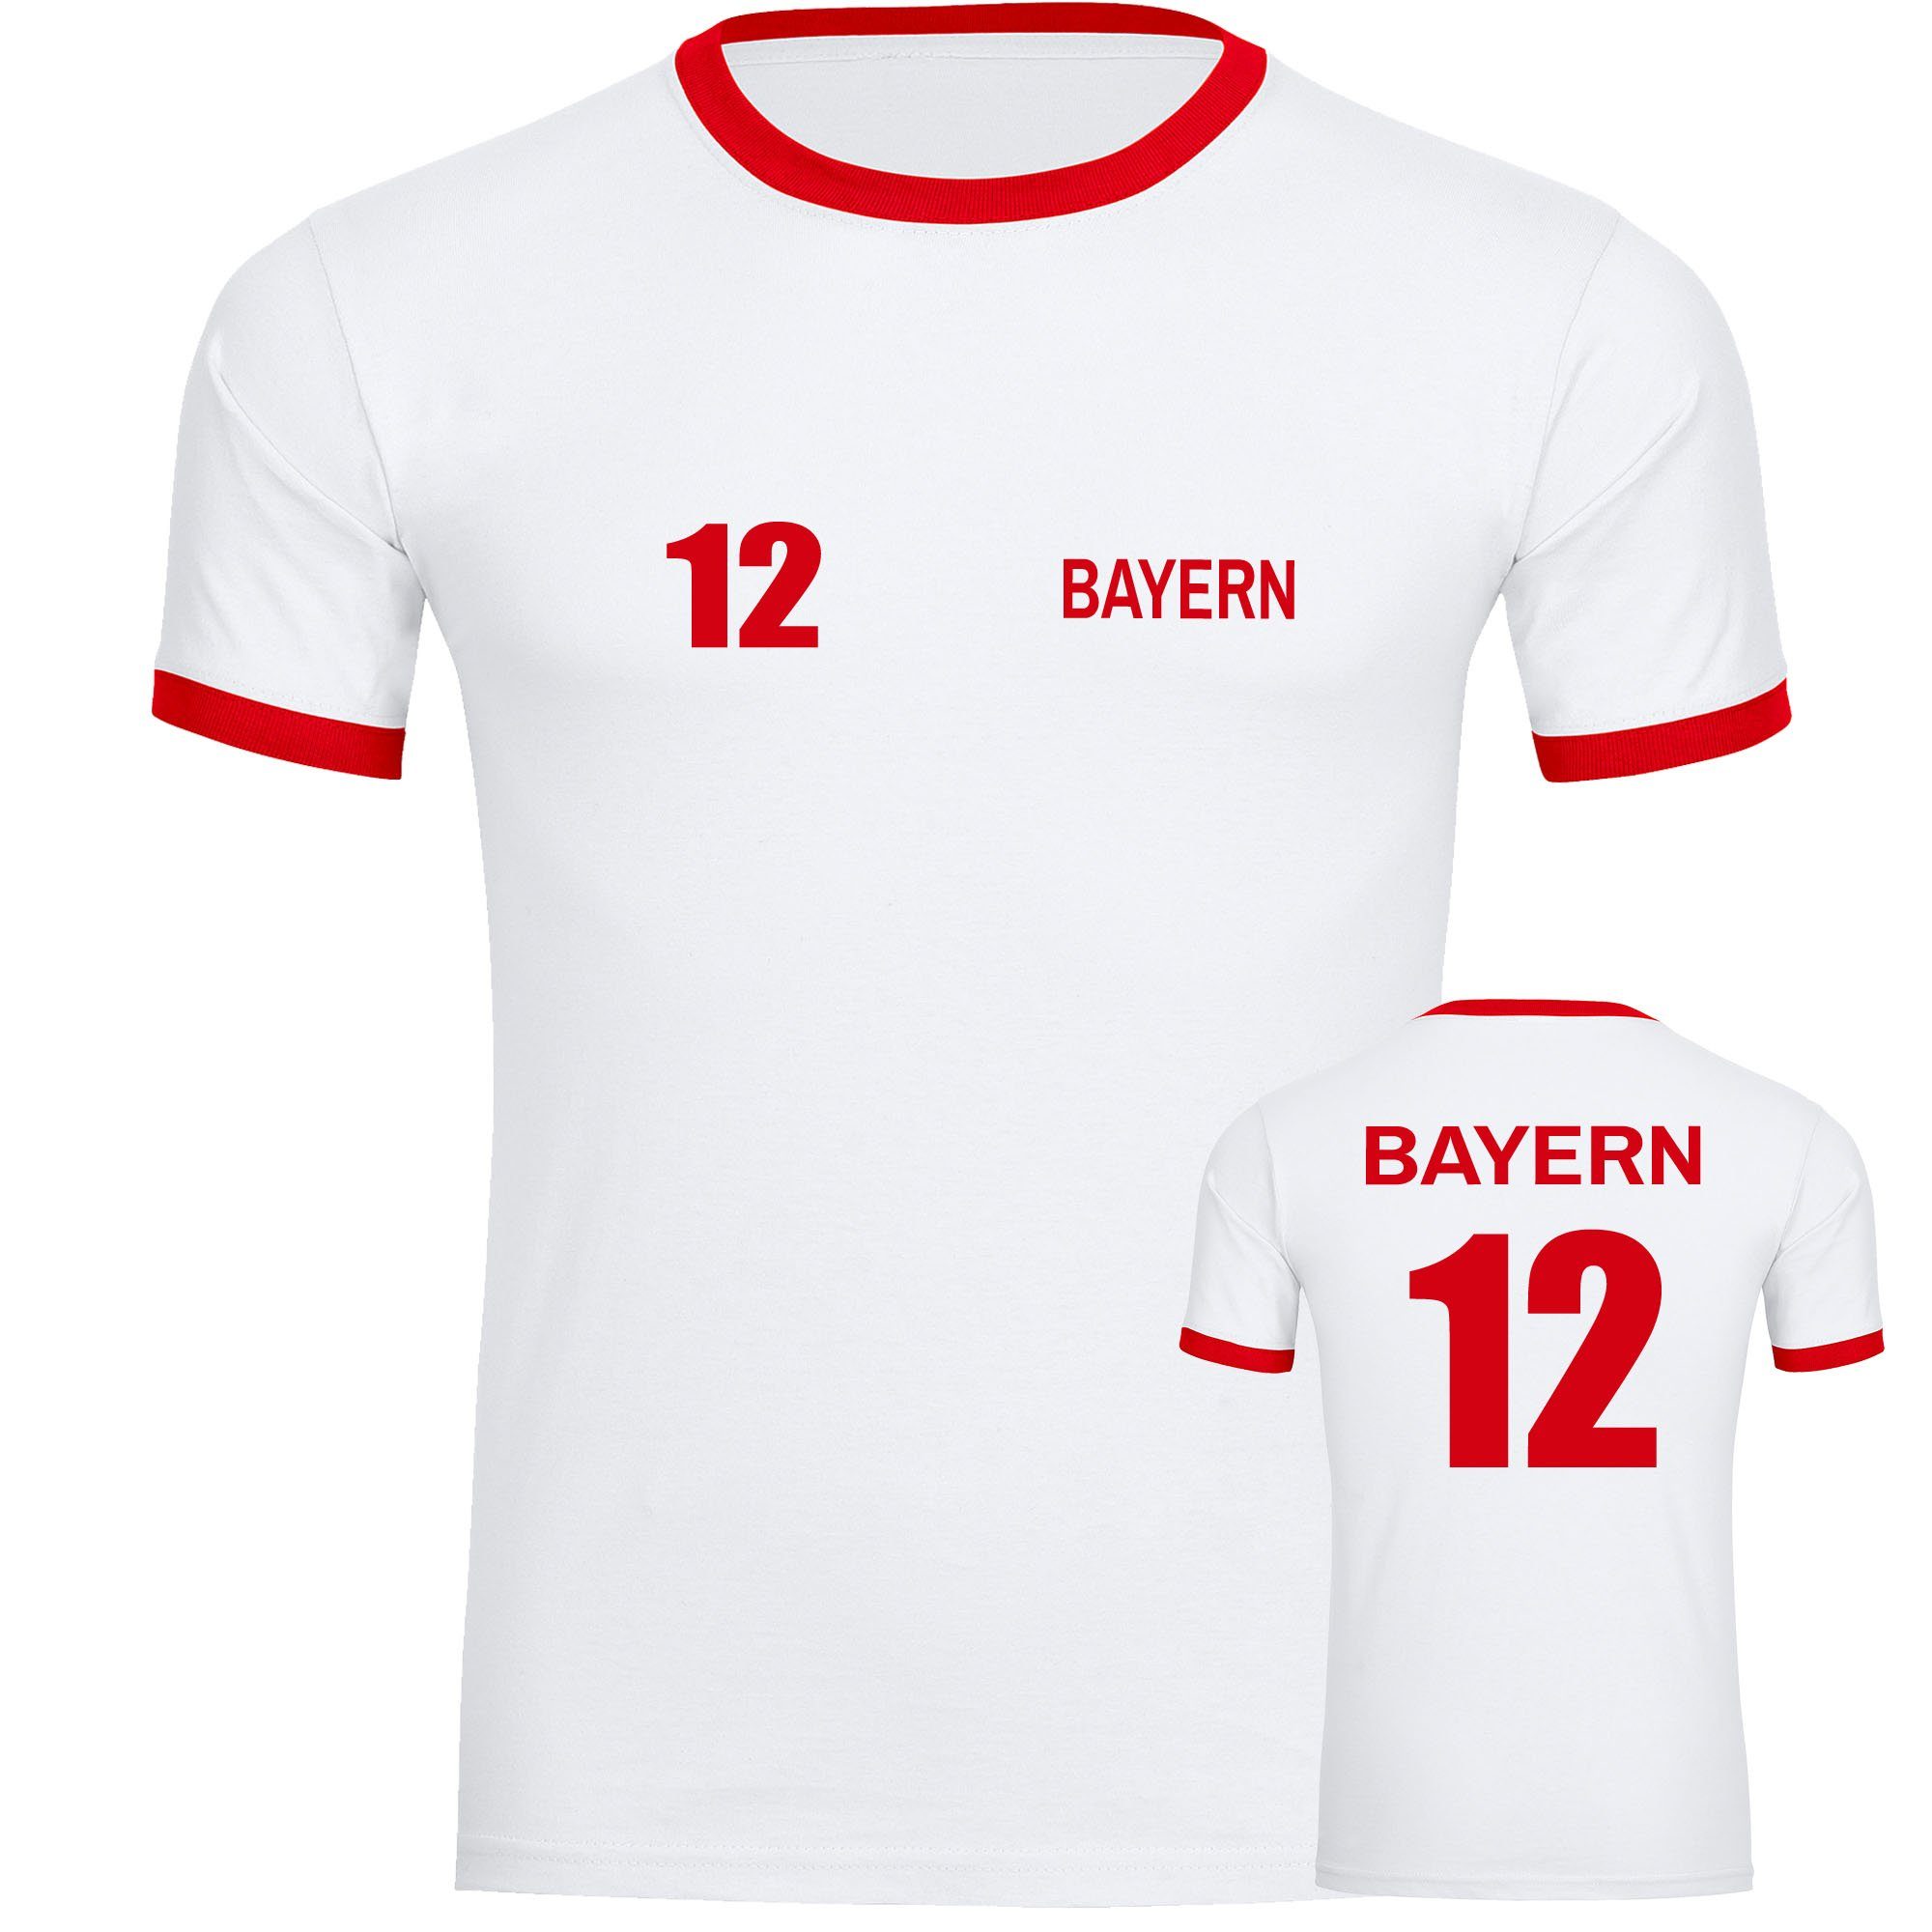 multifanshop T-Shirt Kontrast Bayern - Trikot 12 - Männer